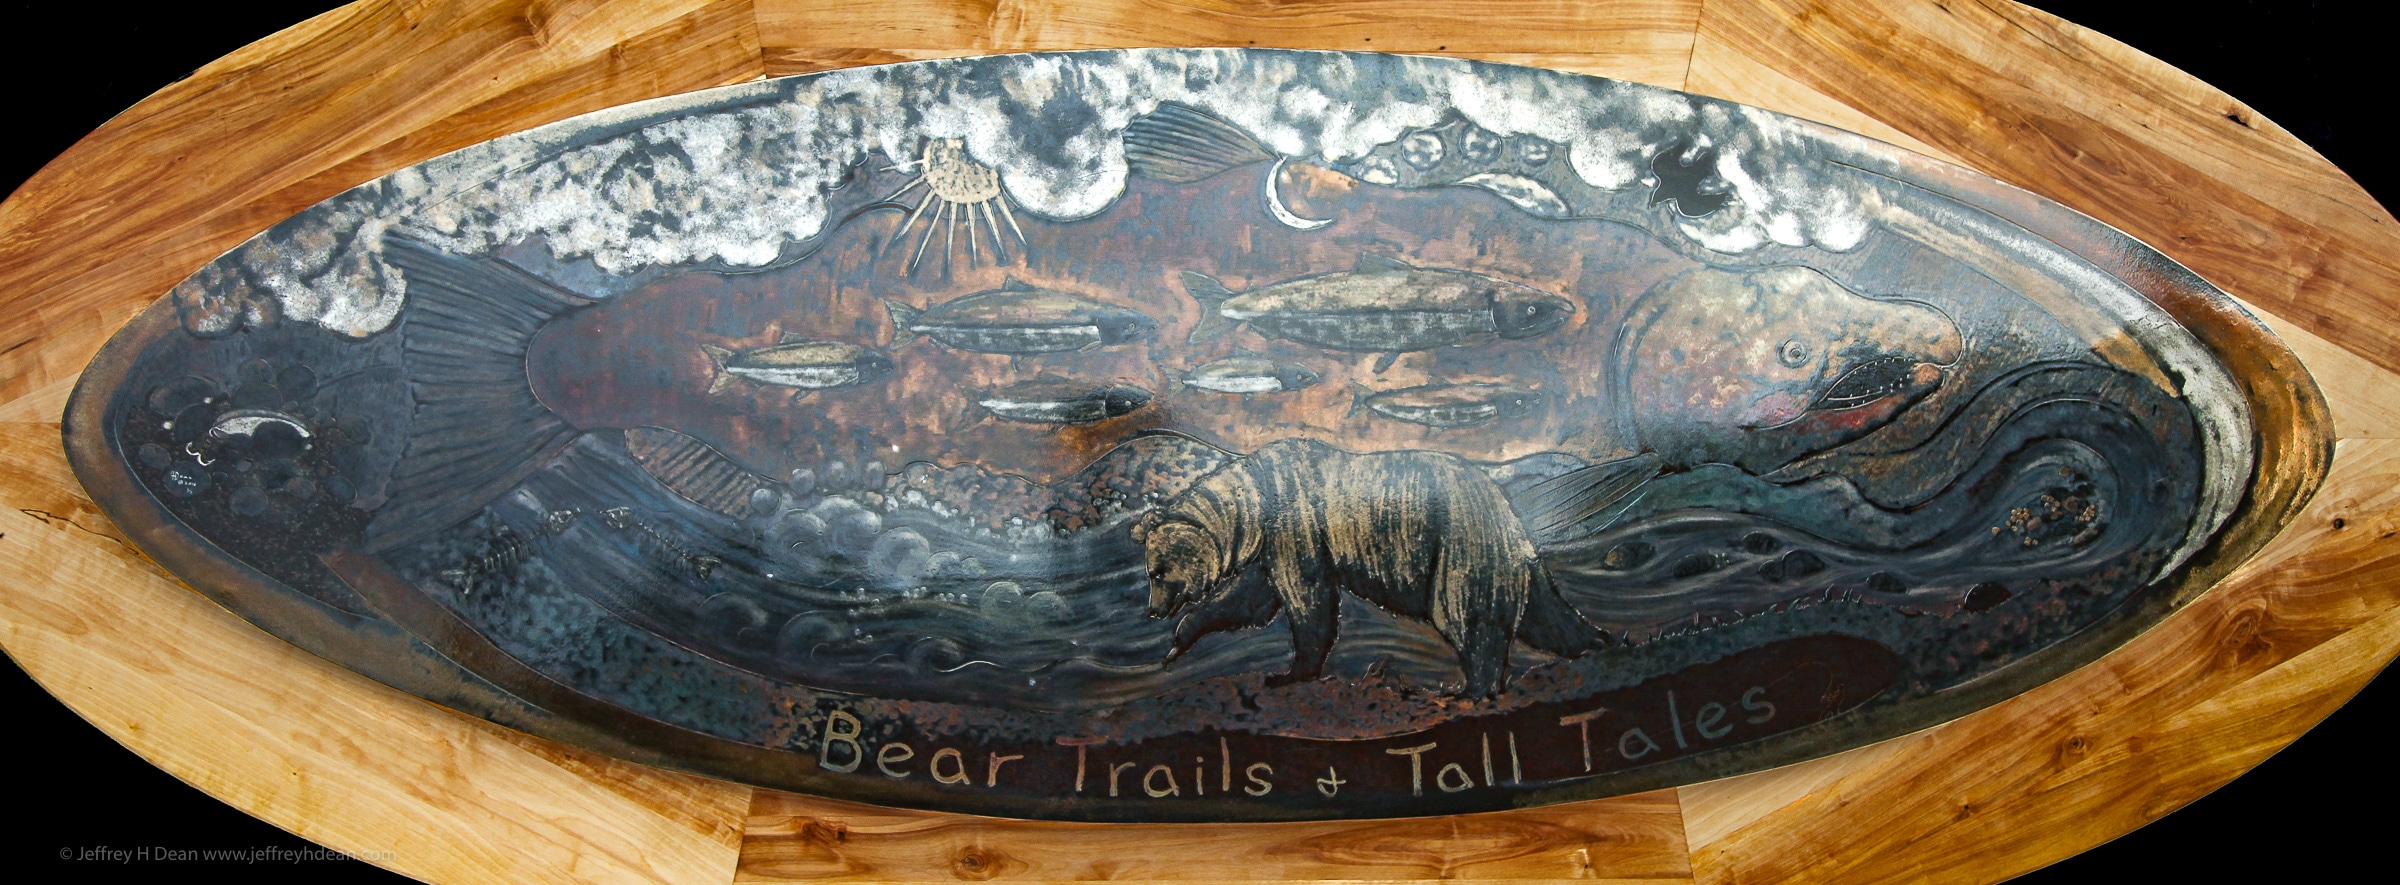 Metal wall art decorative Coffee Table made for Bear Trail Lodge in the Bristol Bay region of Alaska.